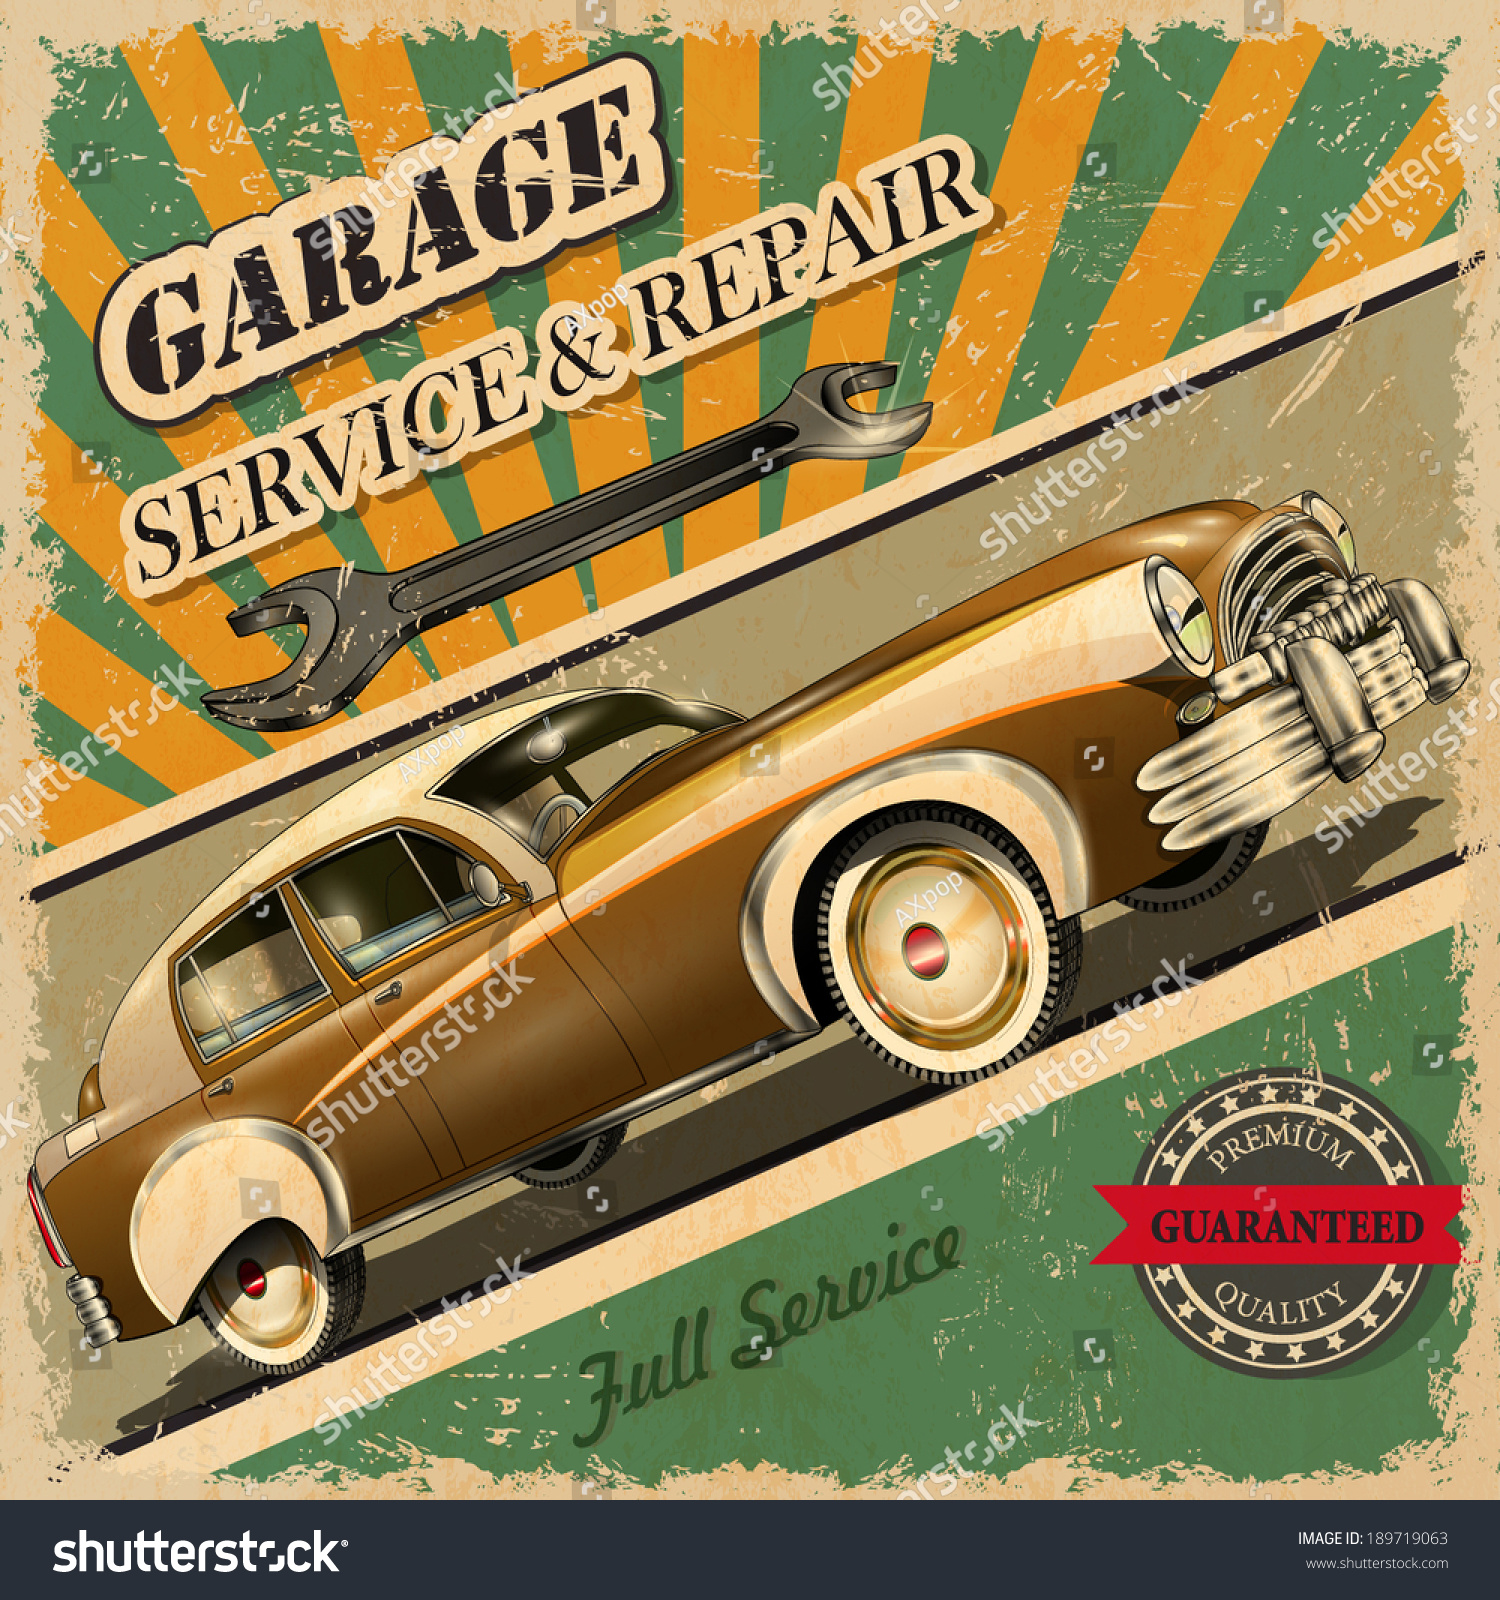 Vintage Garage Retro Poster Stock Vector 189719063 - Shutterstock